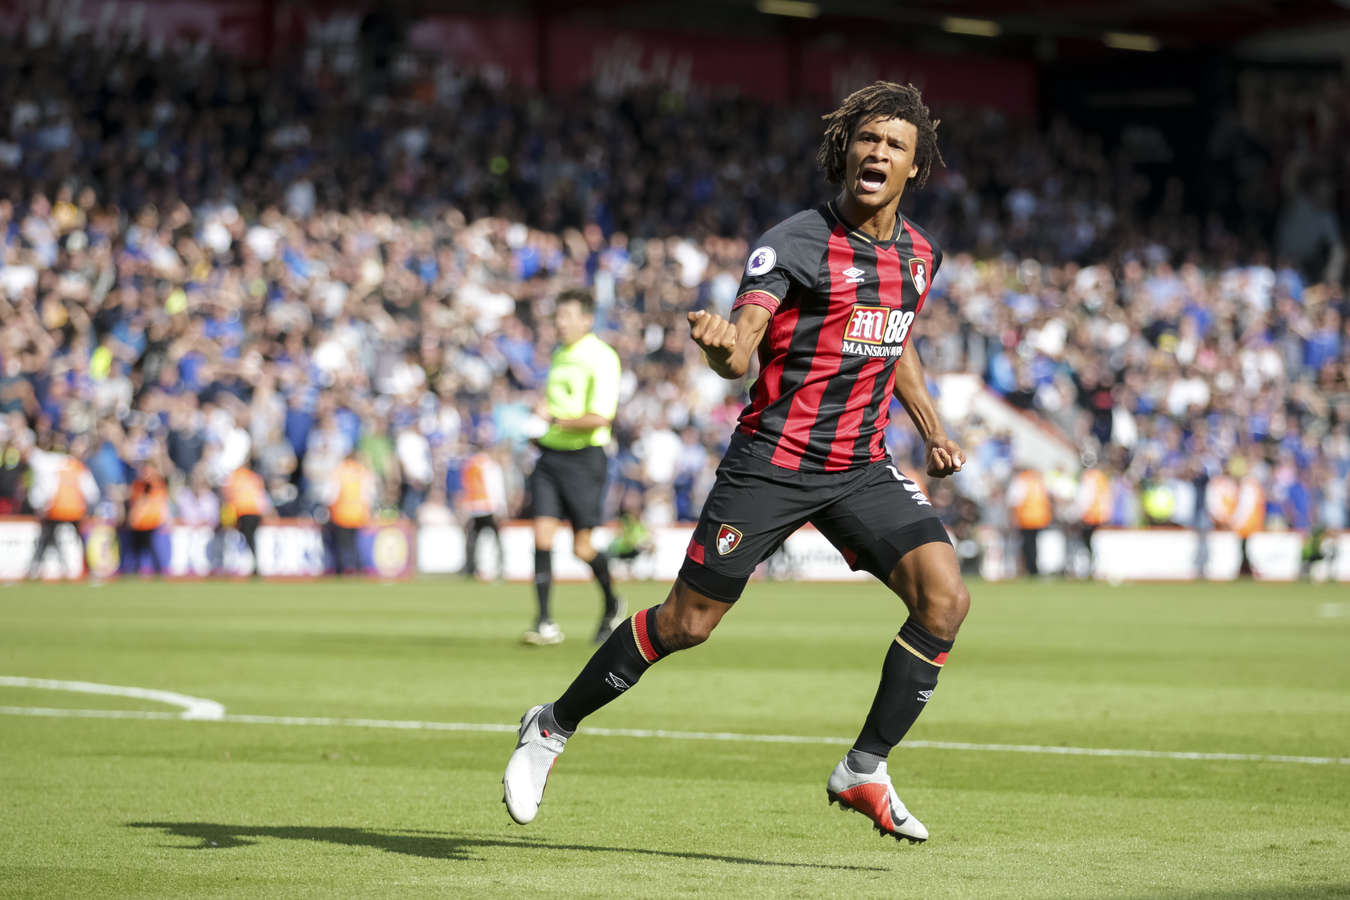 Bournemouth defender Nathan Ake celebrates after scoring. (Getty Images)